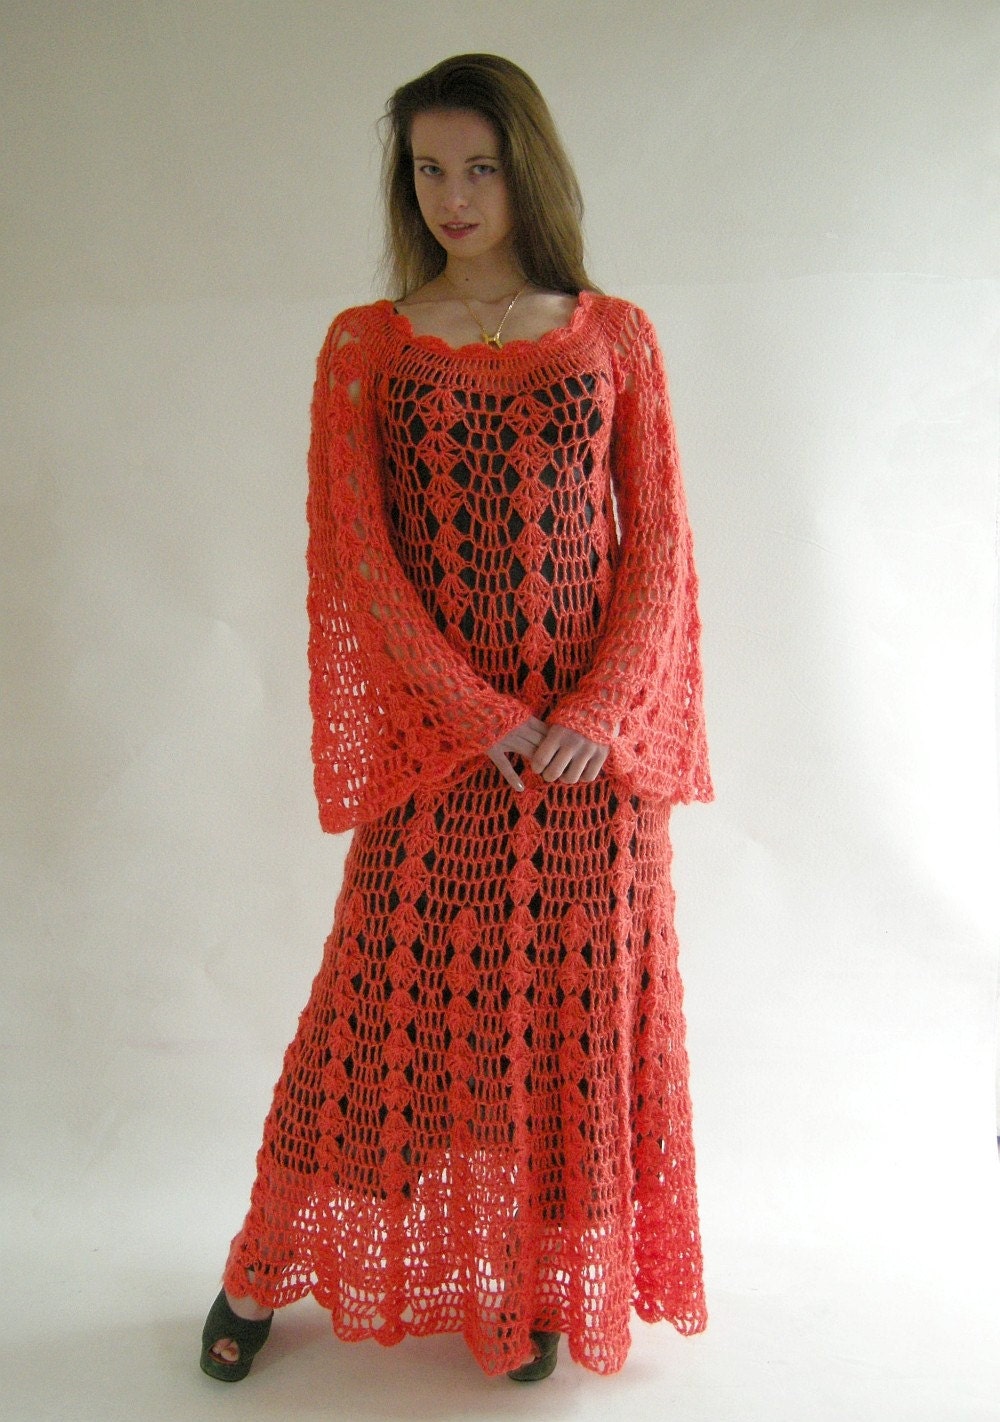 ORANGE Hand Crochet Vintage 60s 70s Maxi Dress S by empressjade from etsy